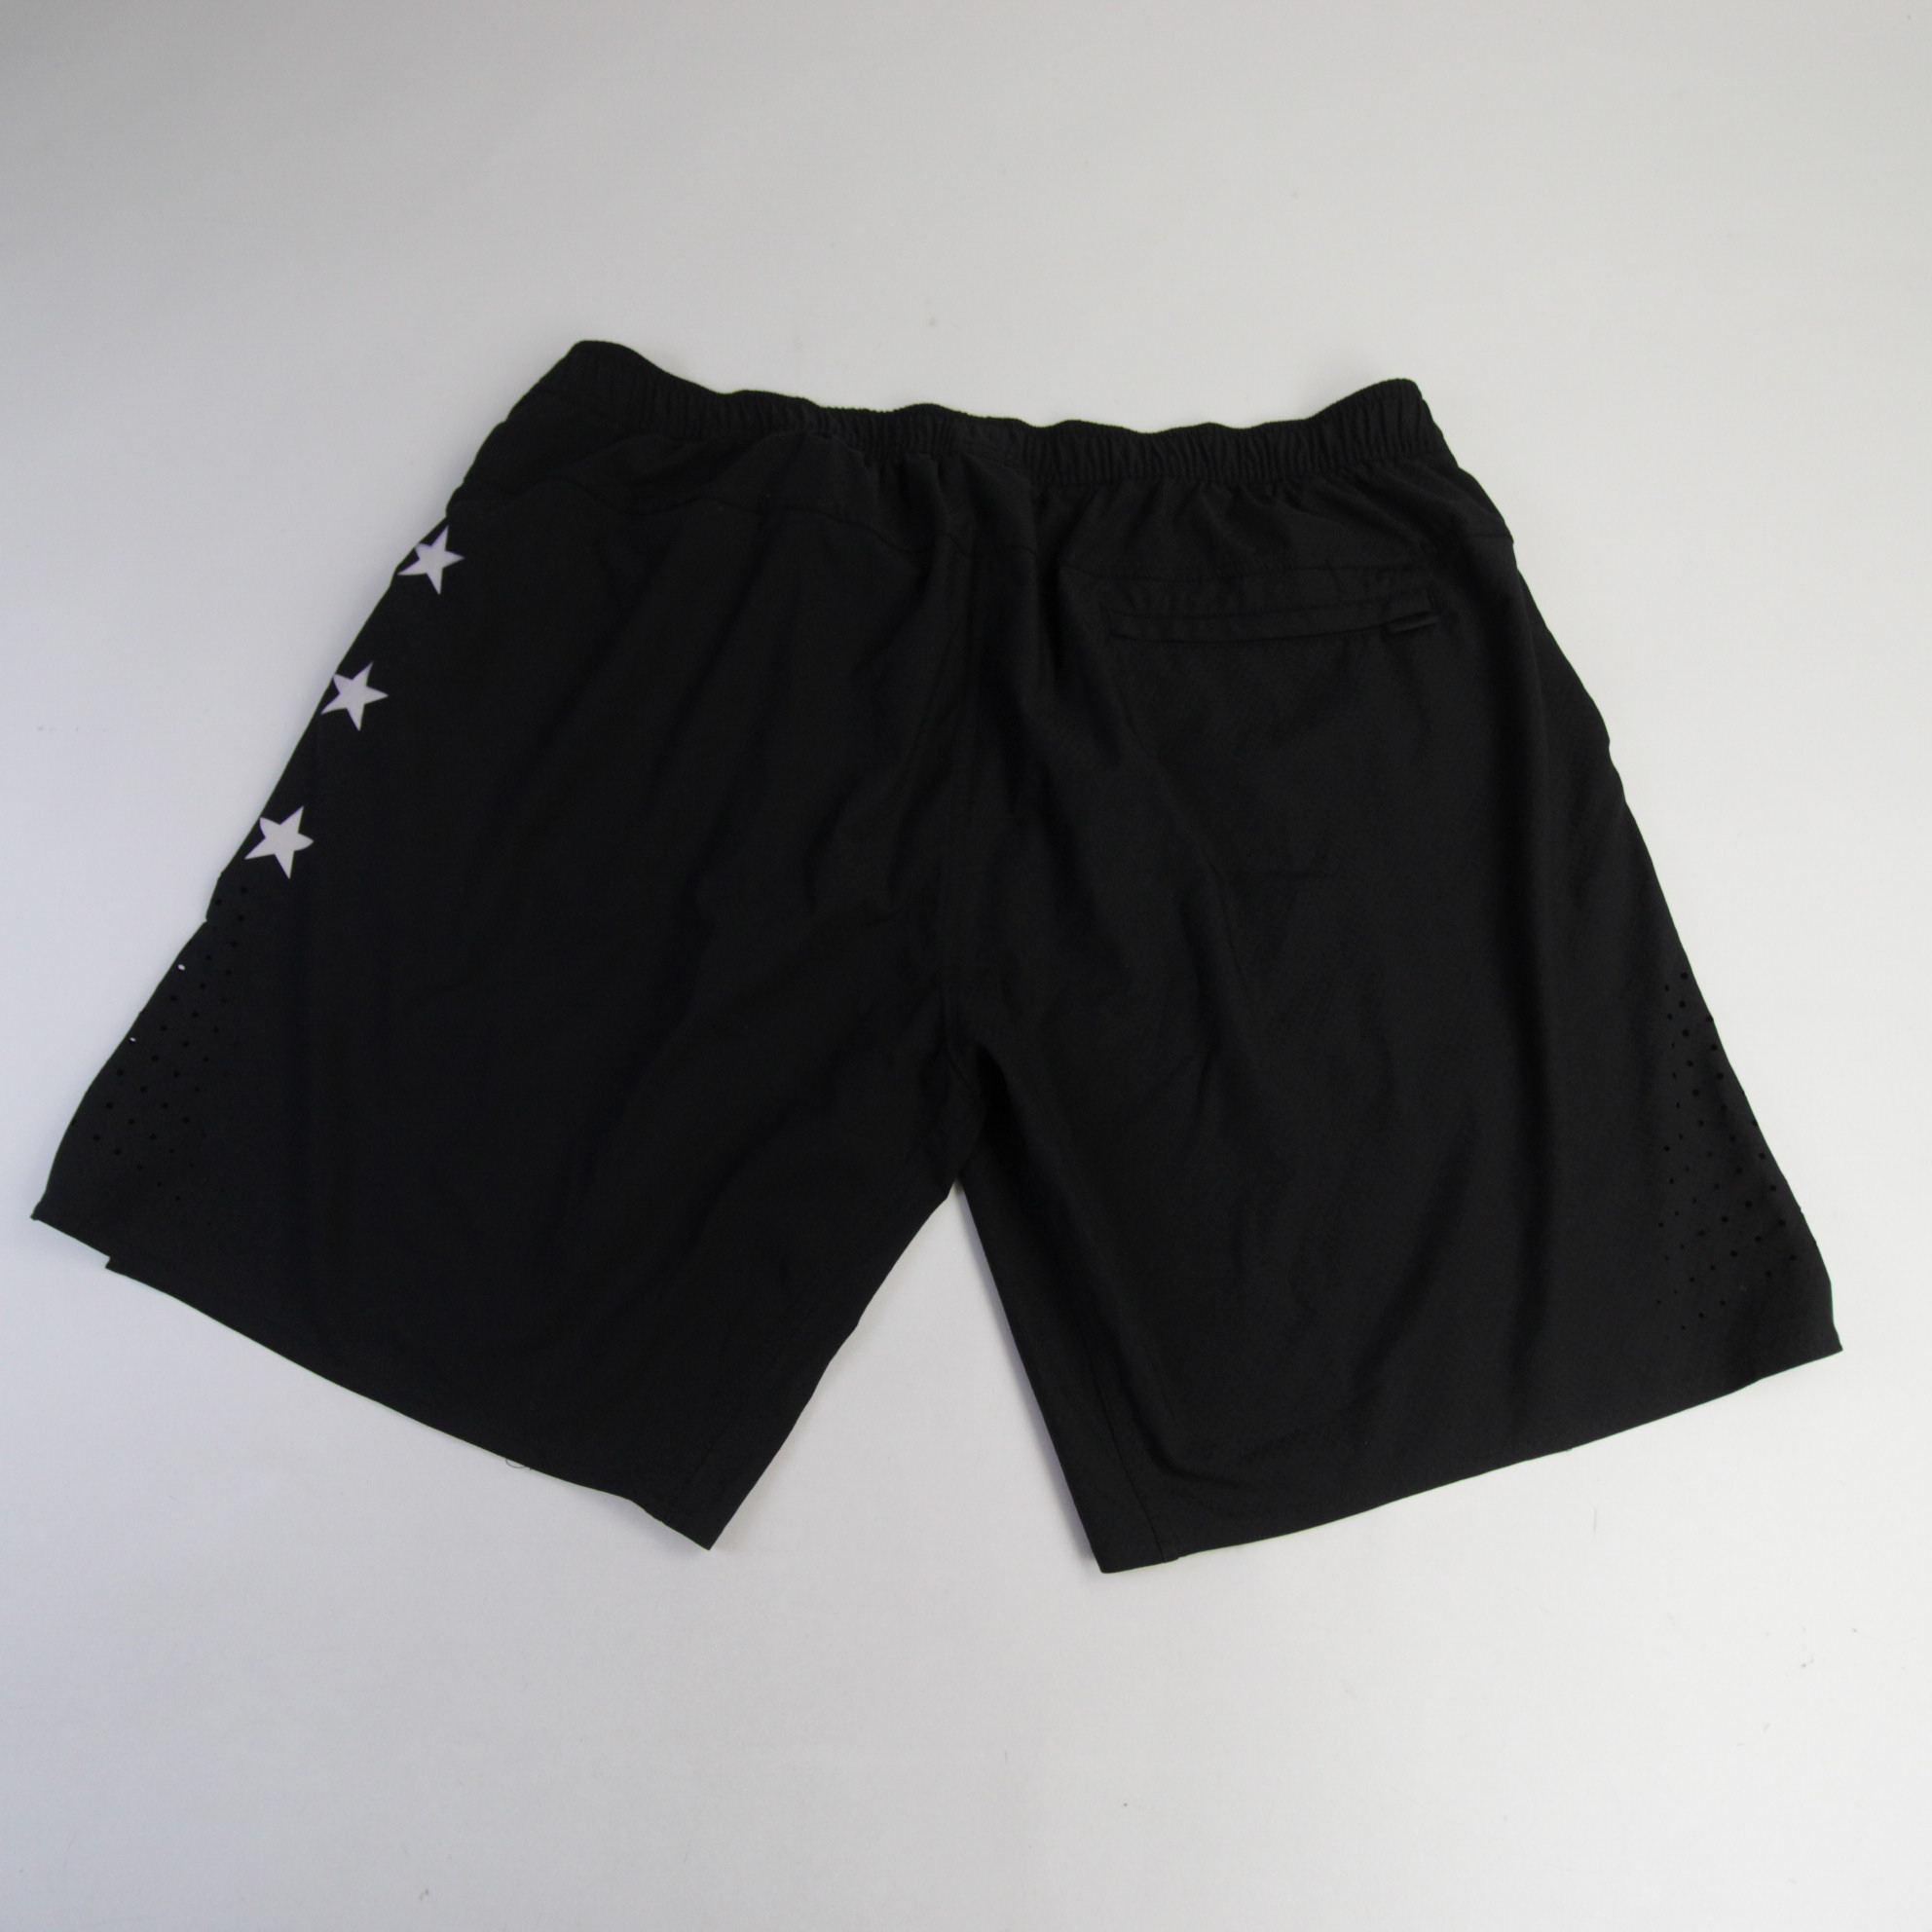 Legends Athletic Shorts Men's Black Used